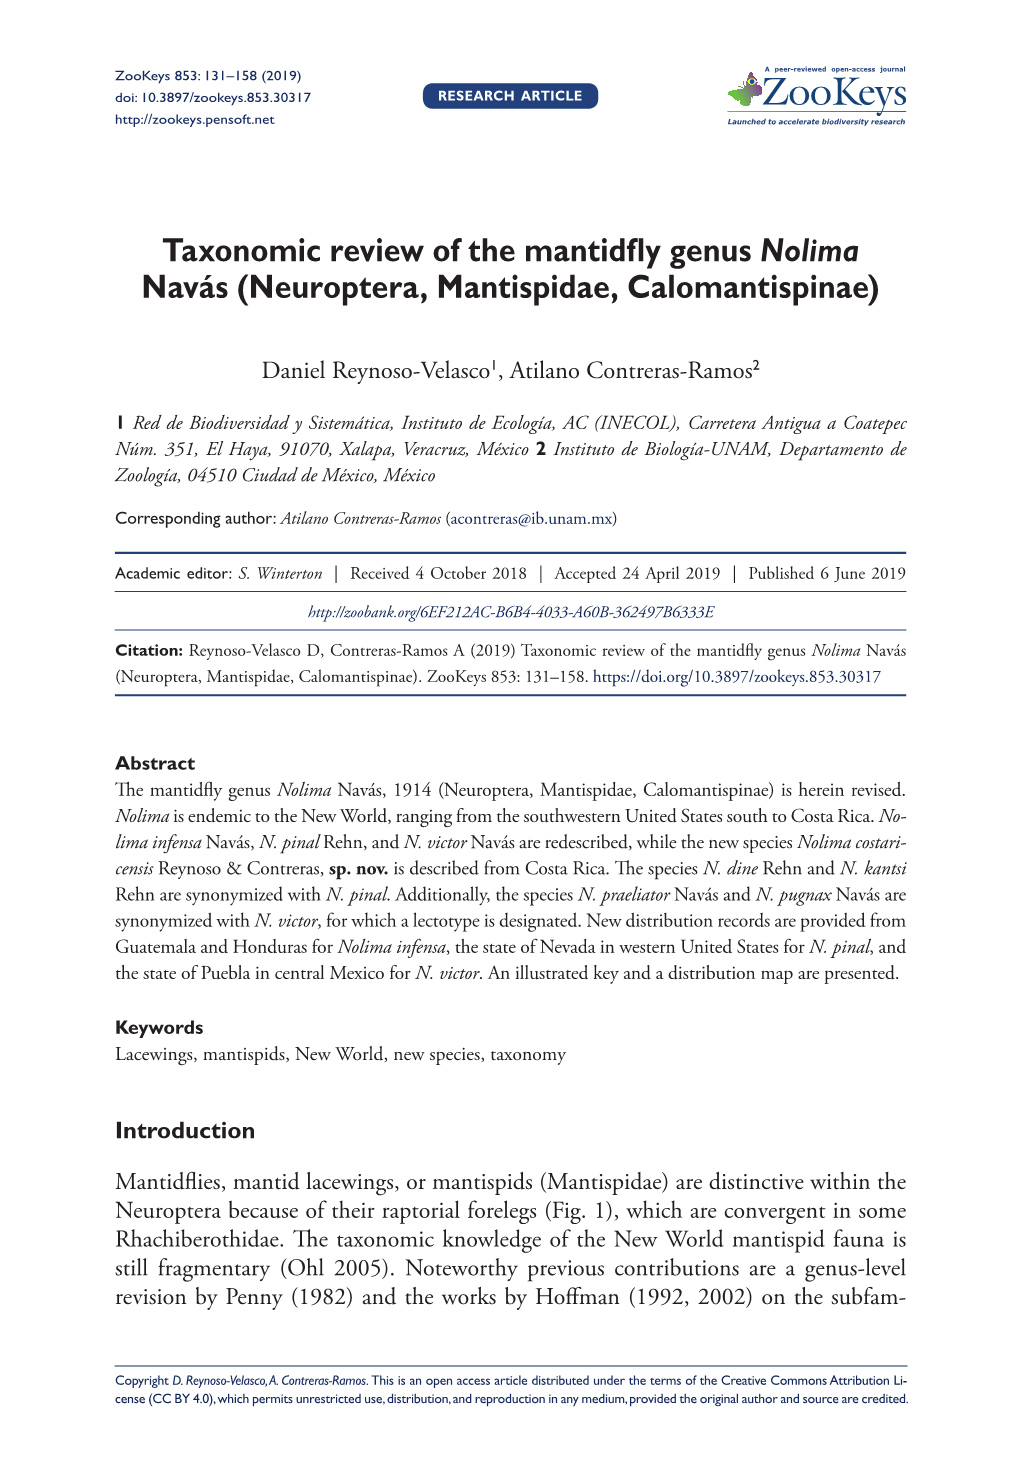 Taxonomic Review of the Mantidfly Genus Nolima Navás (Neuroptera, Mantispidae, Calomantispinae)